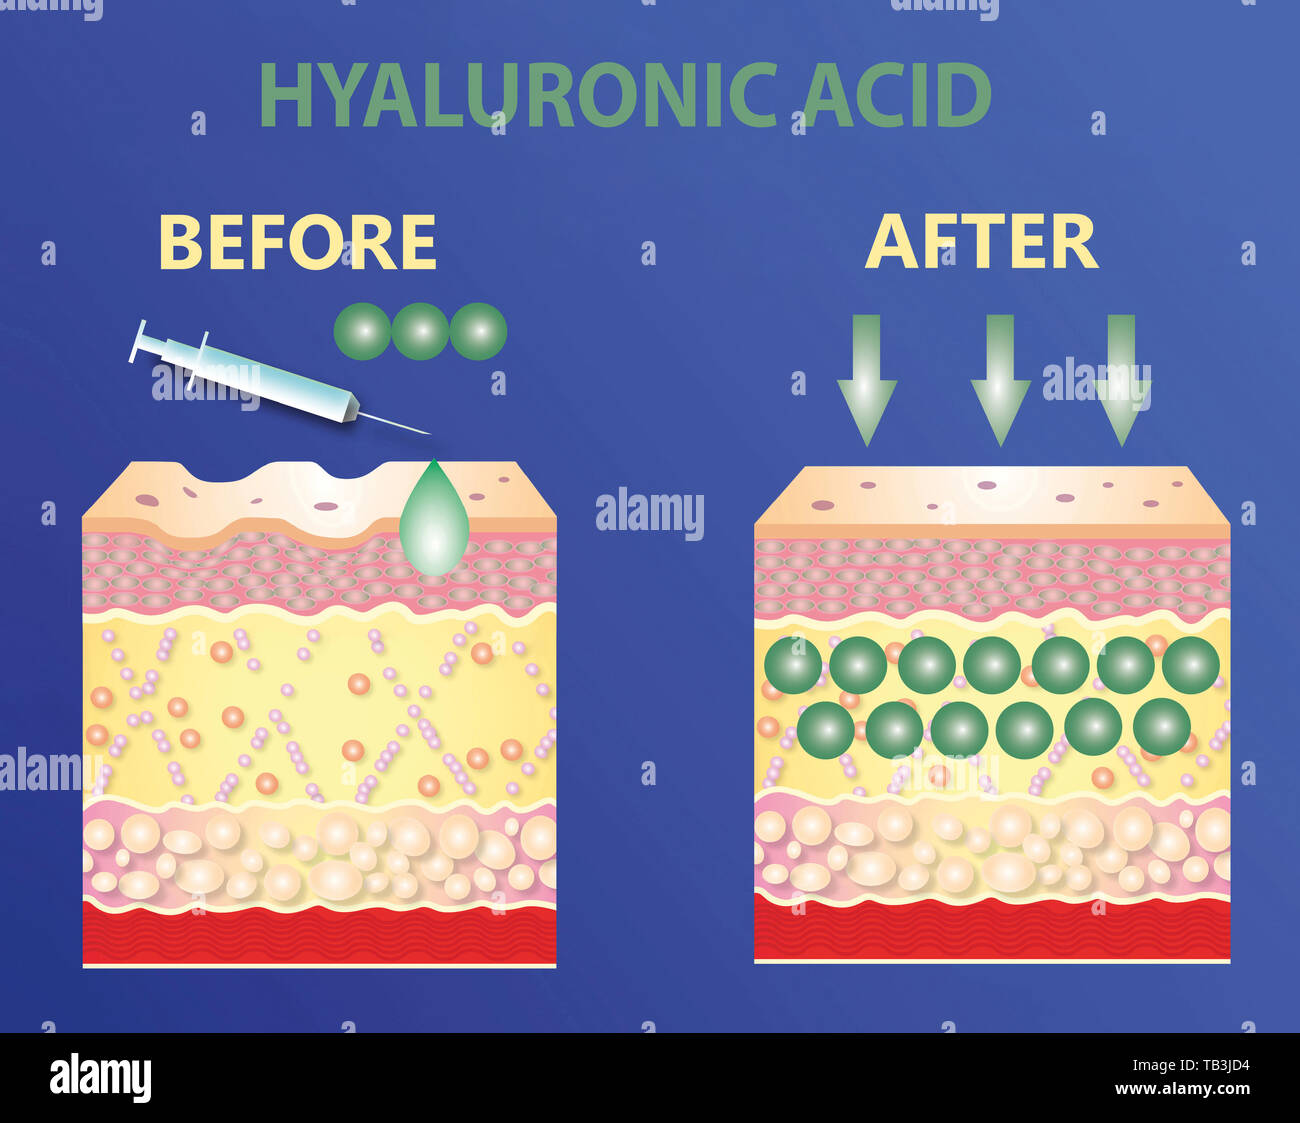 Hyaluronic acid. skin-care products. skin rejuvenation Stock Photo